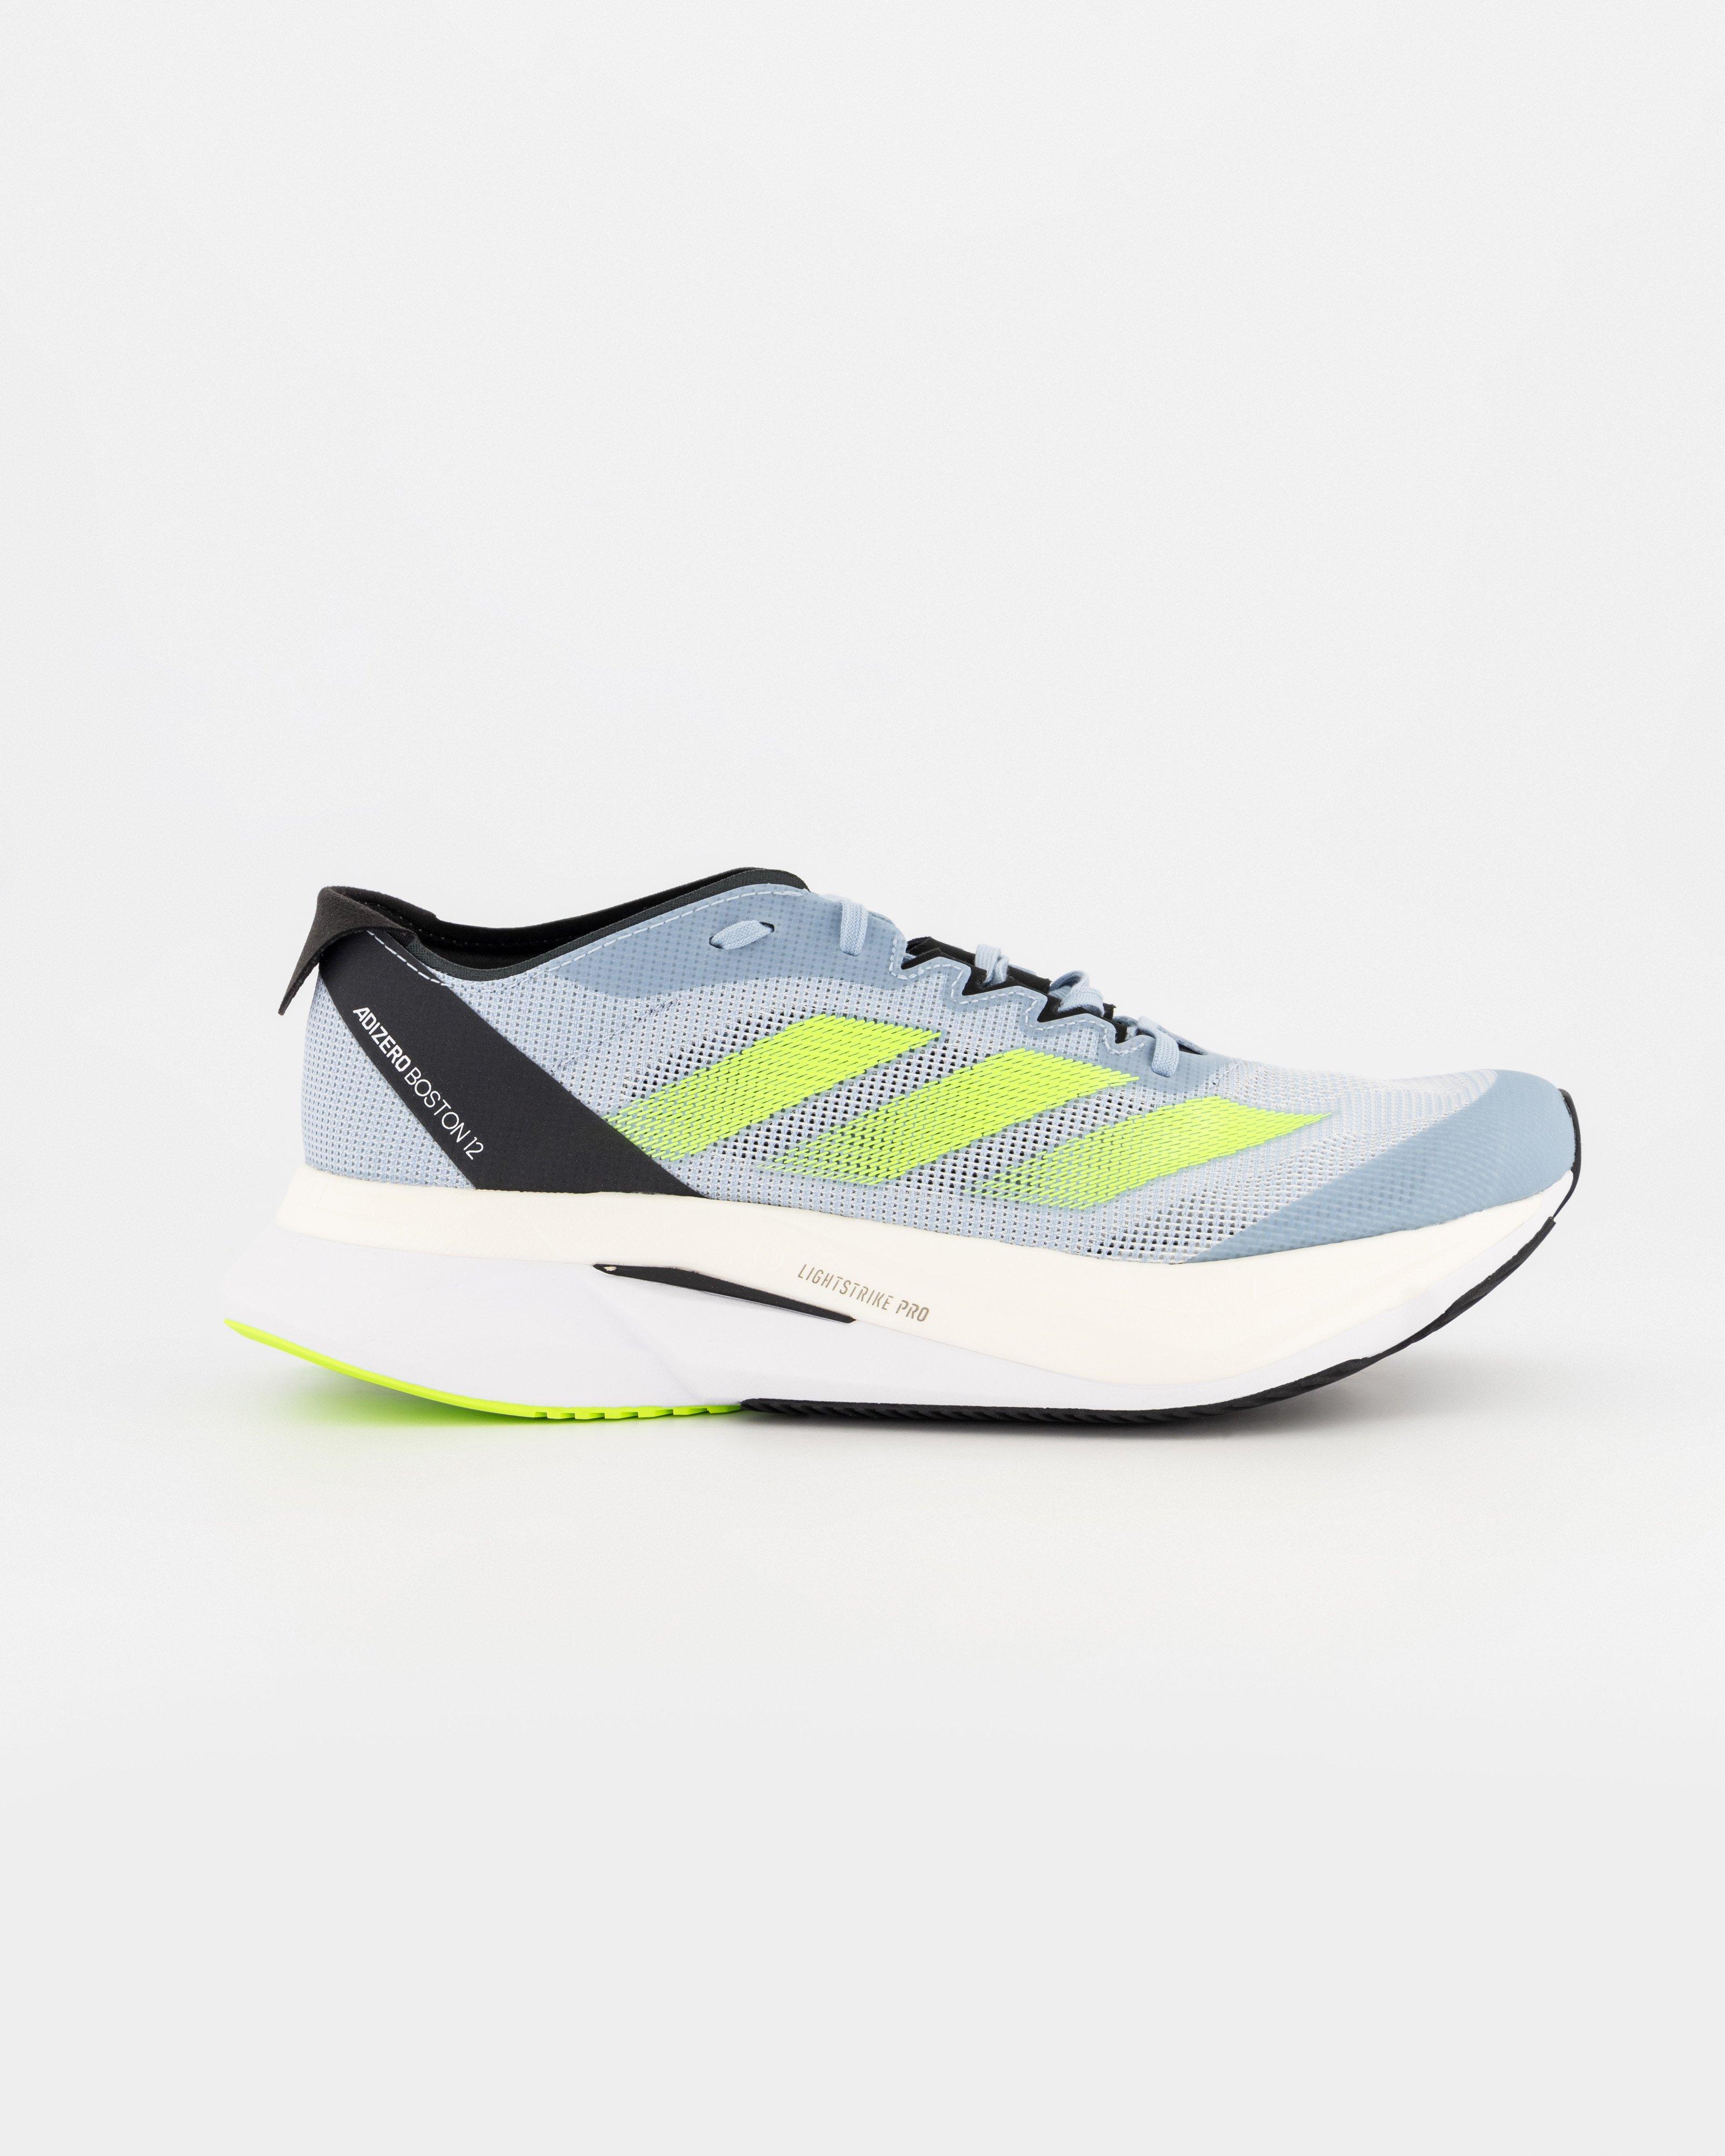 Adidas Men’s ADIZERO BOSTON 12 Road Running Shoes -  Light Blue